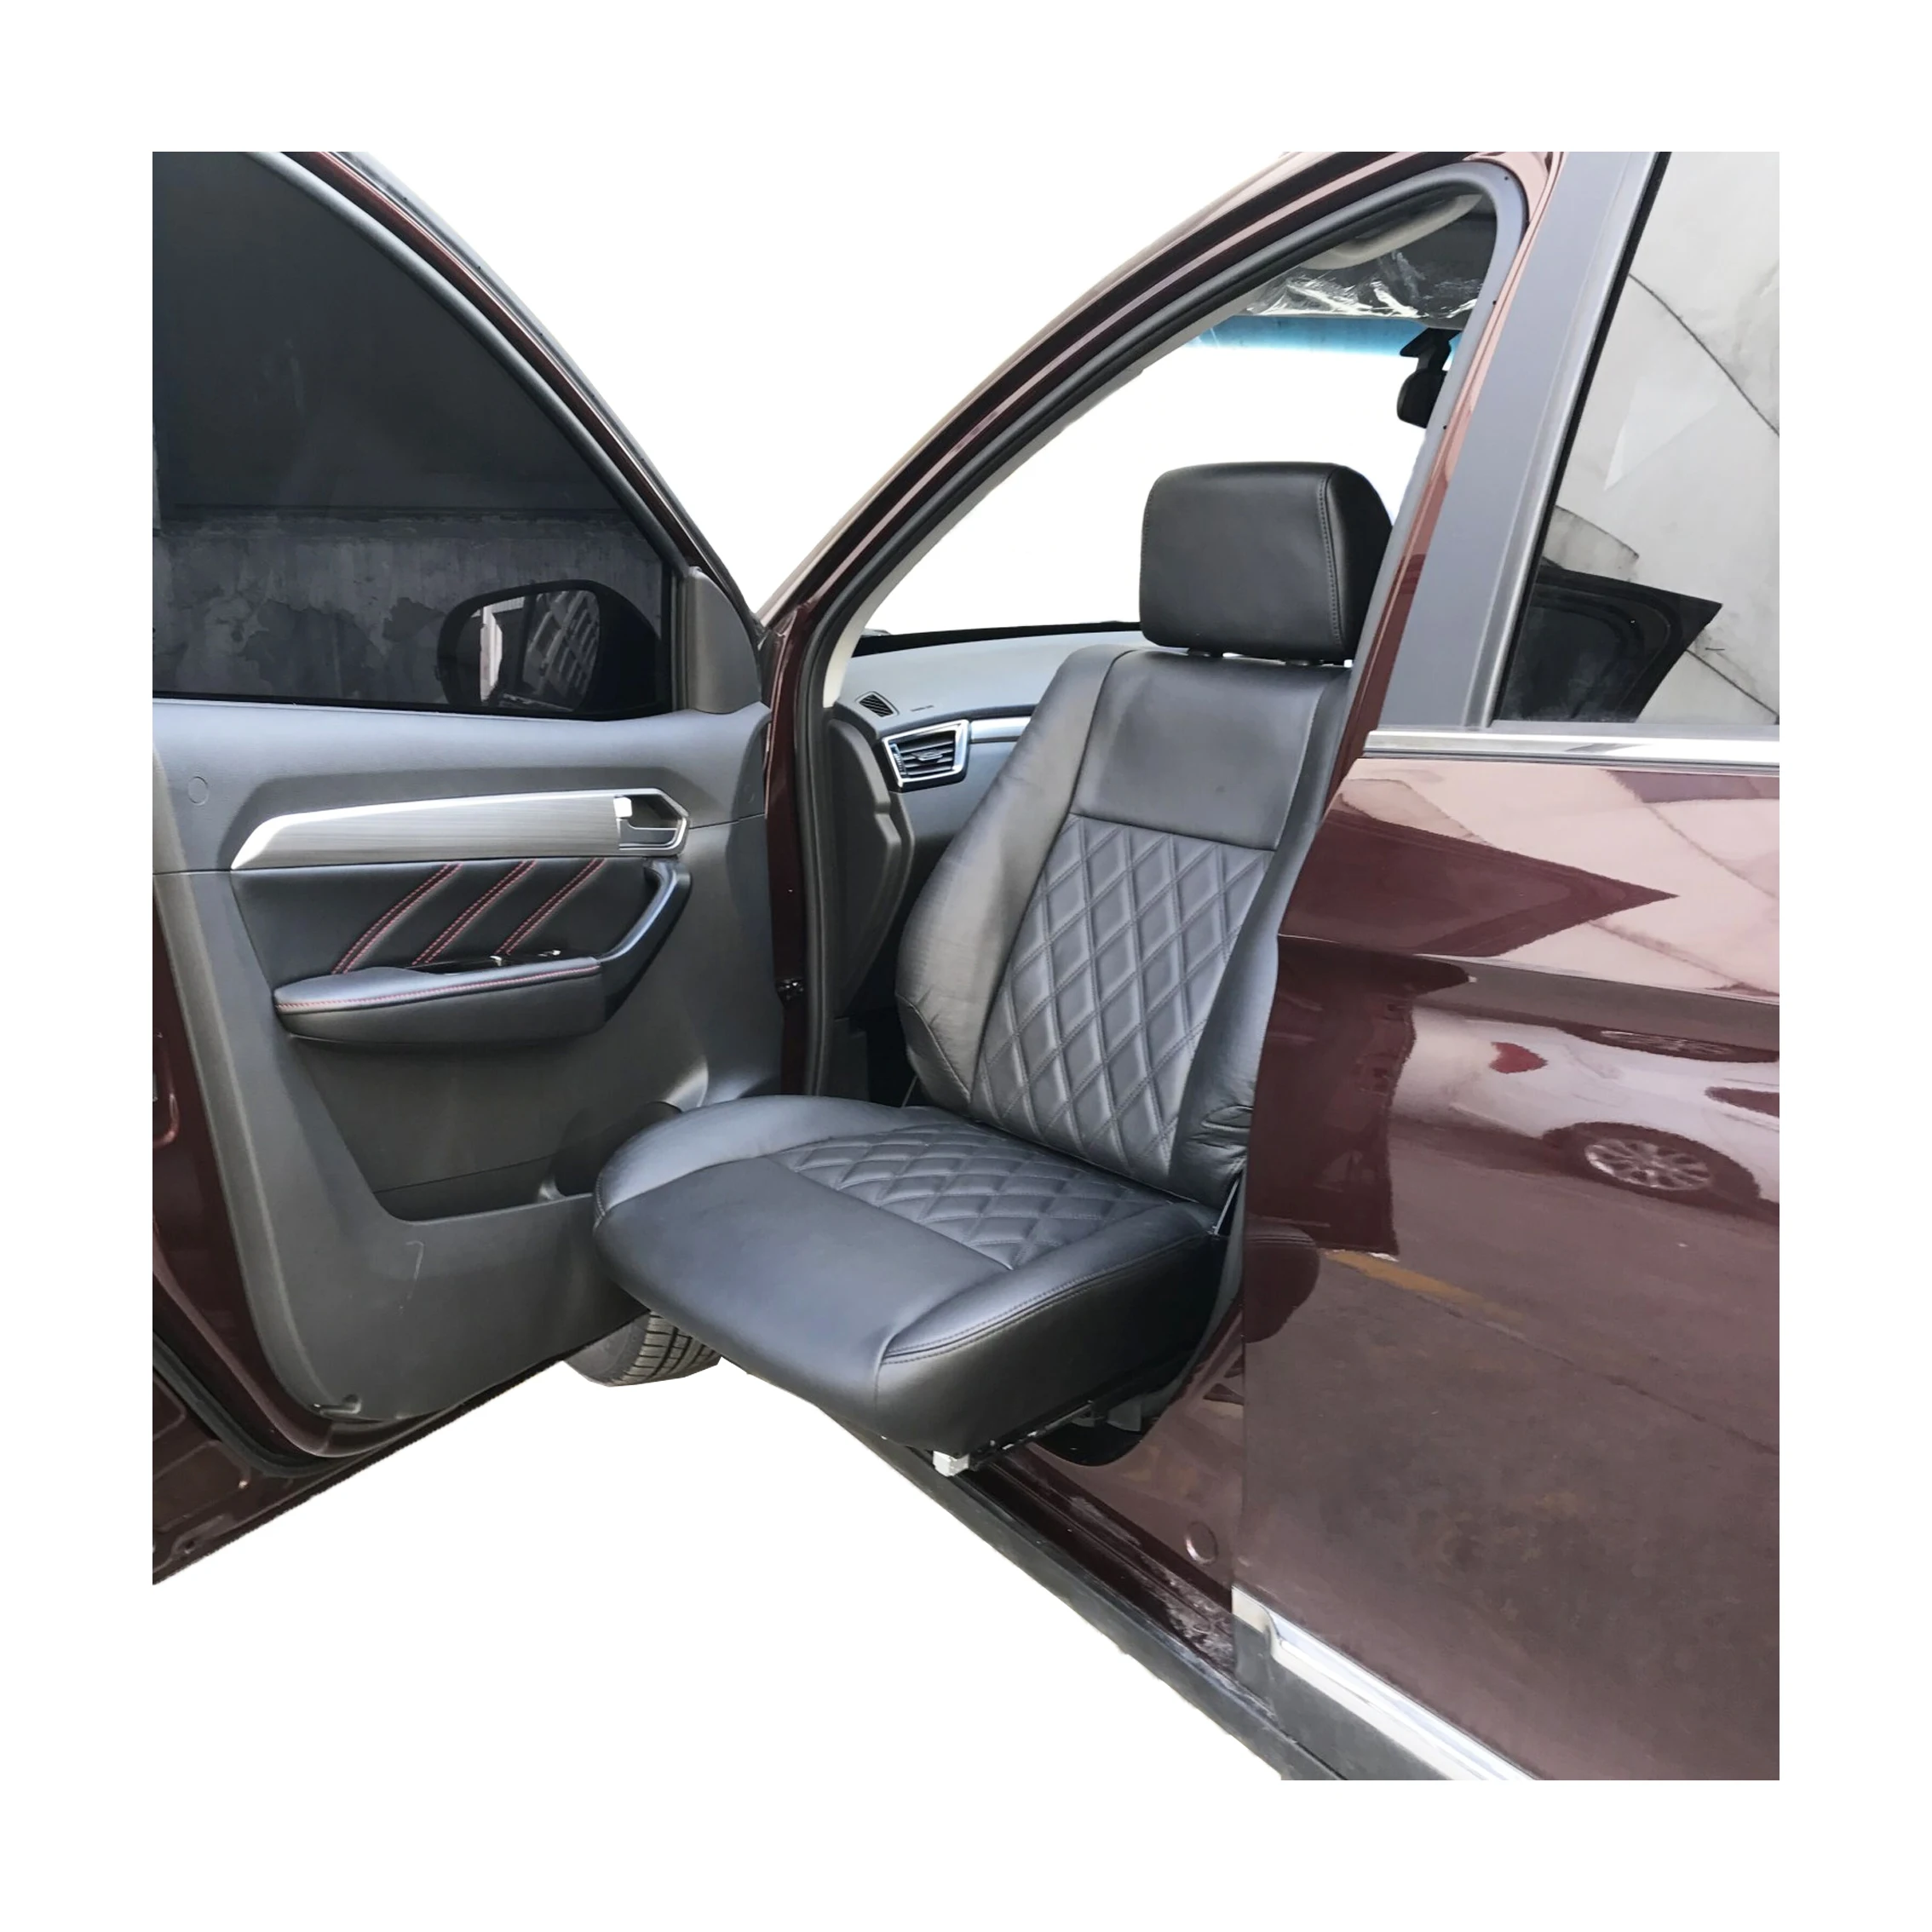 Unique Bargains 360° Rotating Auto Car Multifunction Swivel Seat Cushion  Transfer Disc Fit Car Seat Beige 16.93x14.96x0.79 : Target